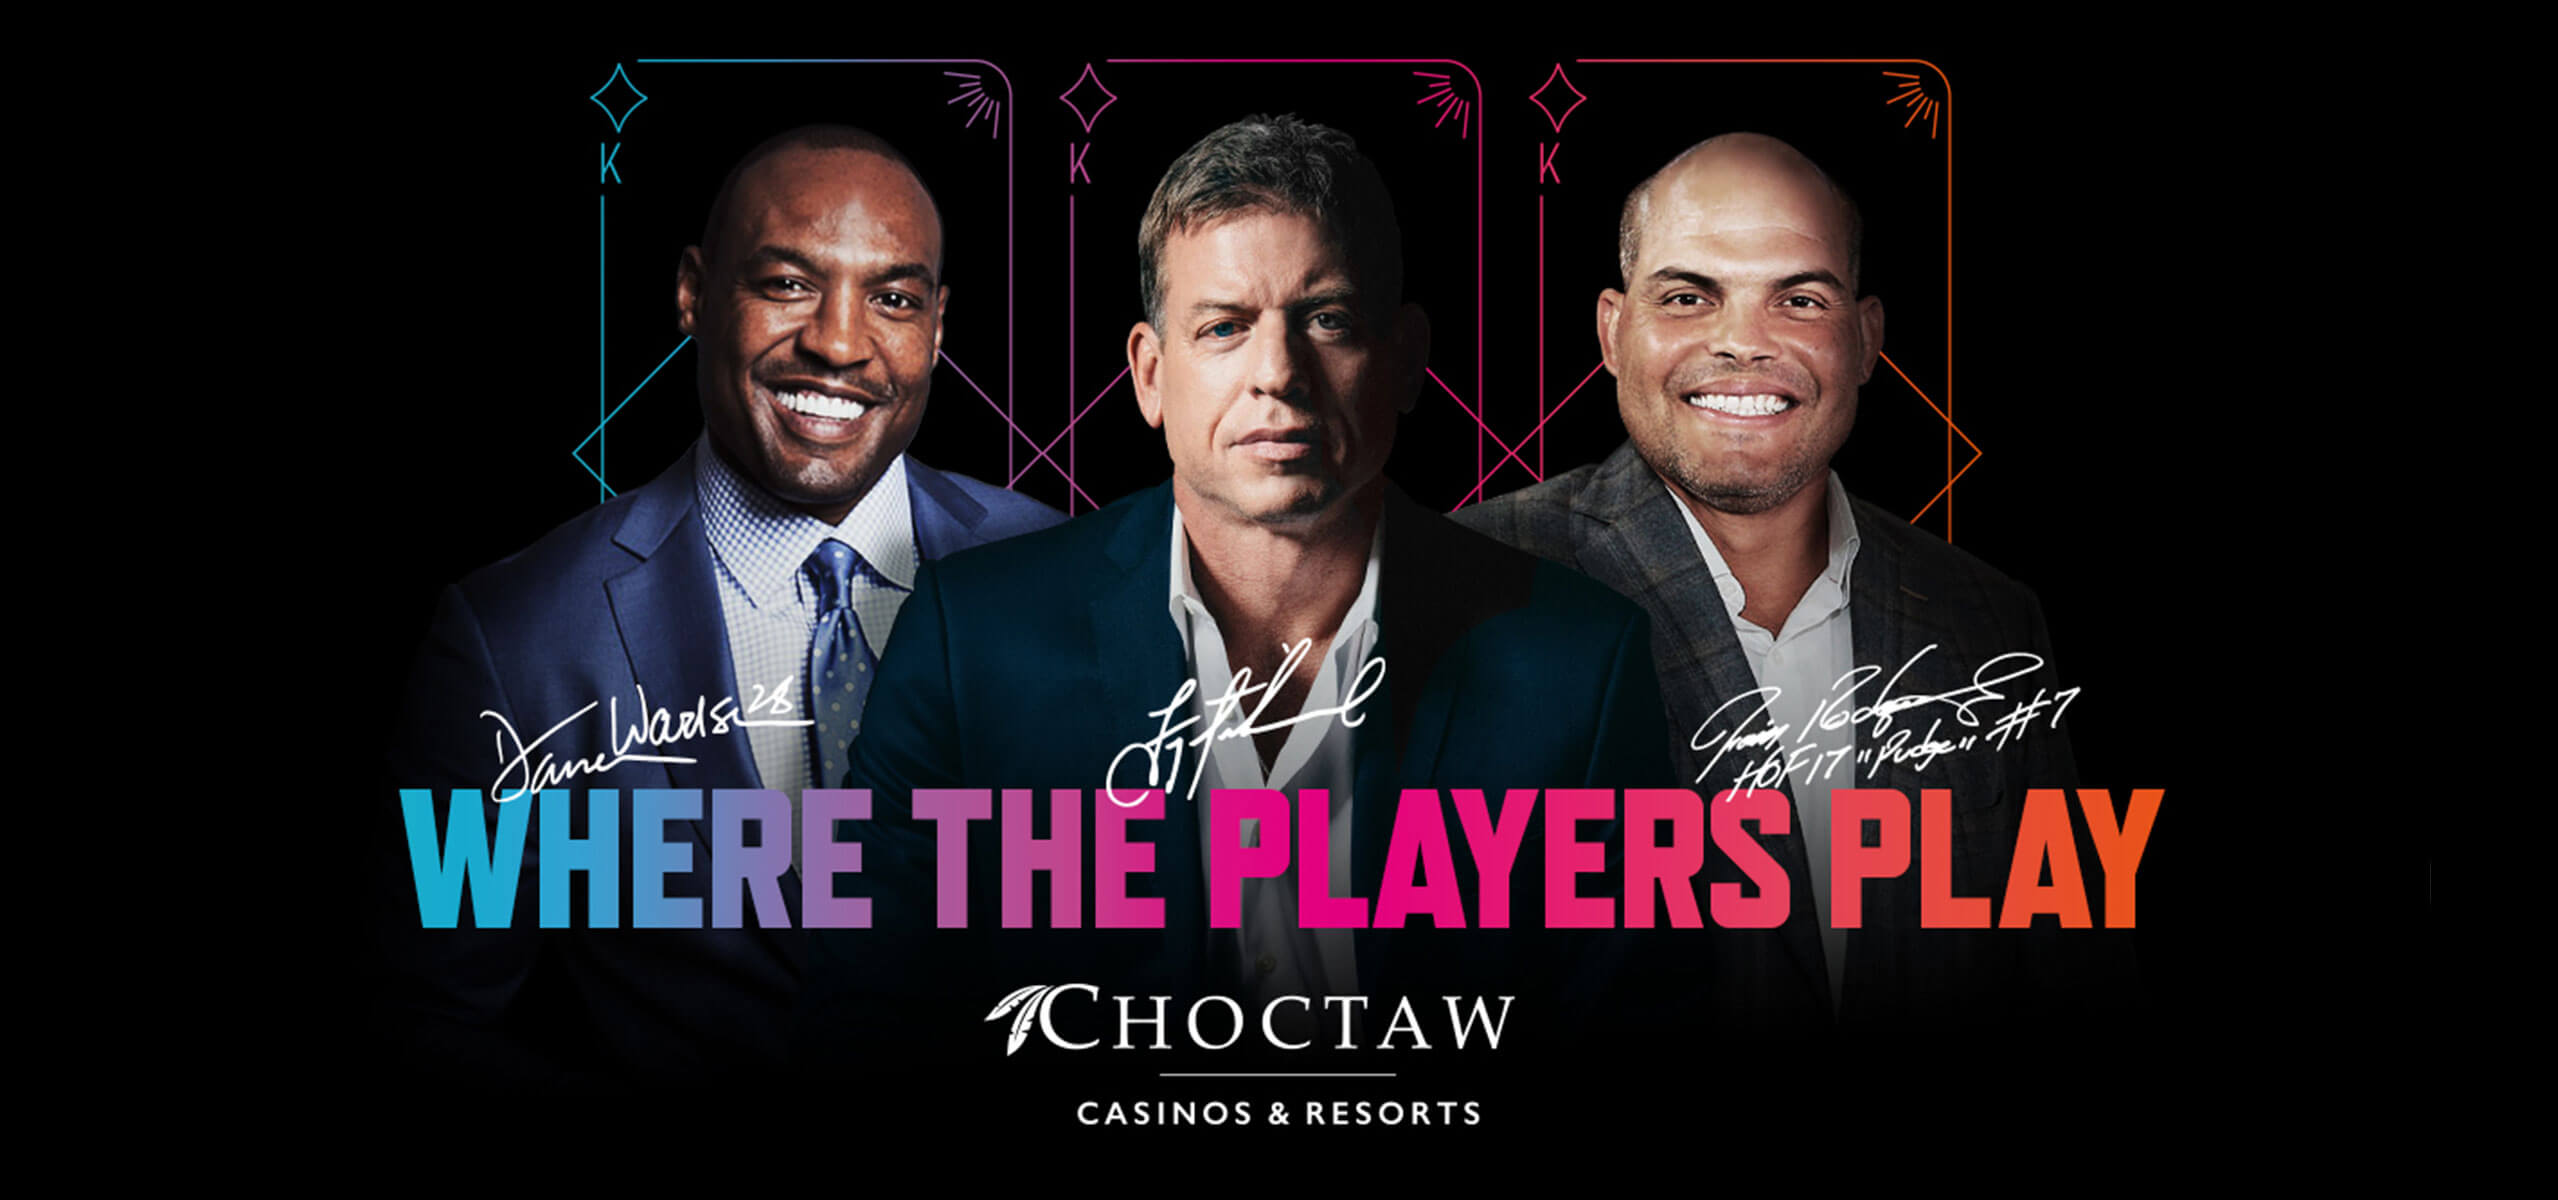 CHOCTAW CASINOS & RESORTS SIGN TROY AIKMAN, IVAN “PUDGE” RODRIGUEZ, DARREN  WOODSON TO TRAILBLAZING FOUR-YEAR ENDORSEMENT DEAL - Choctaw Casinos